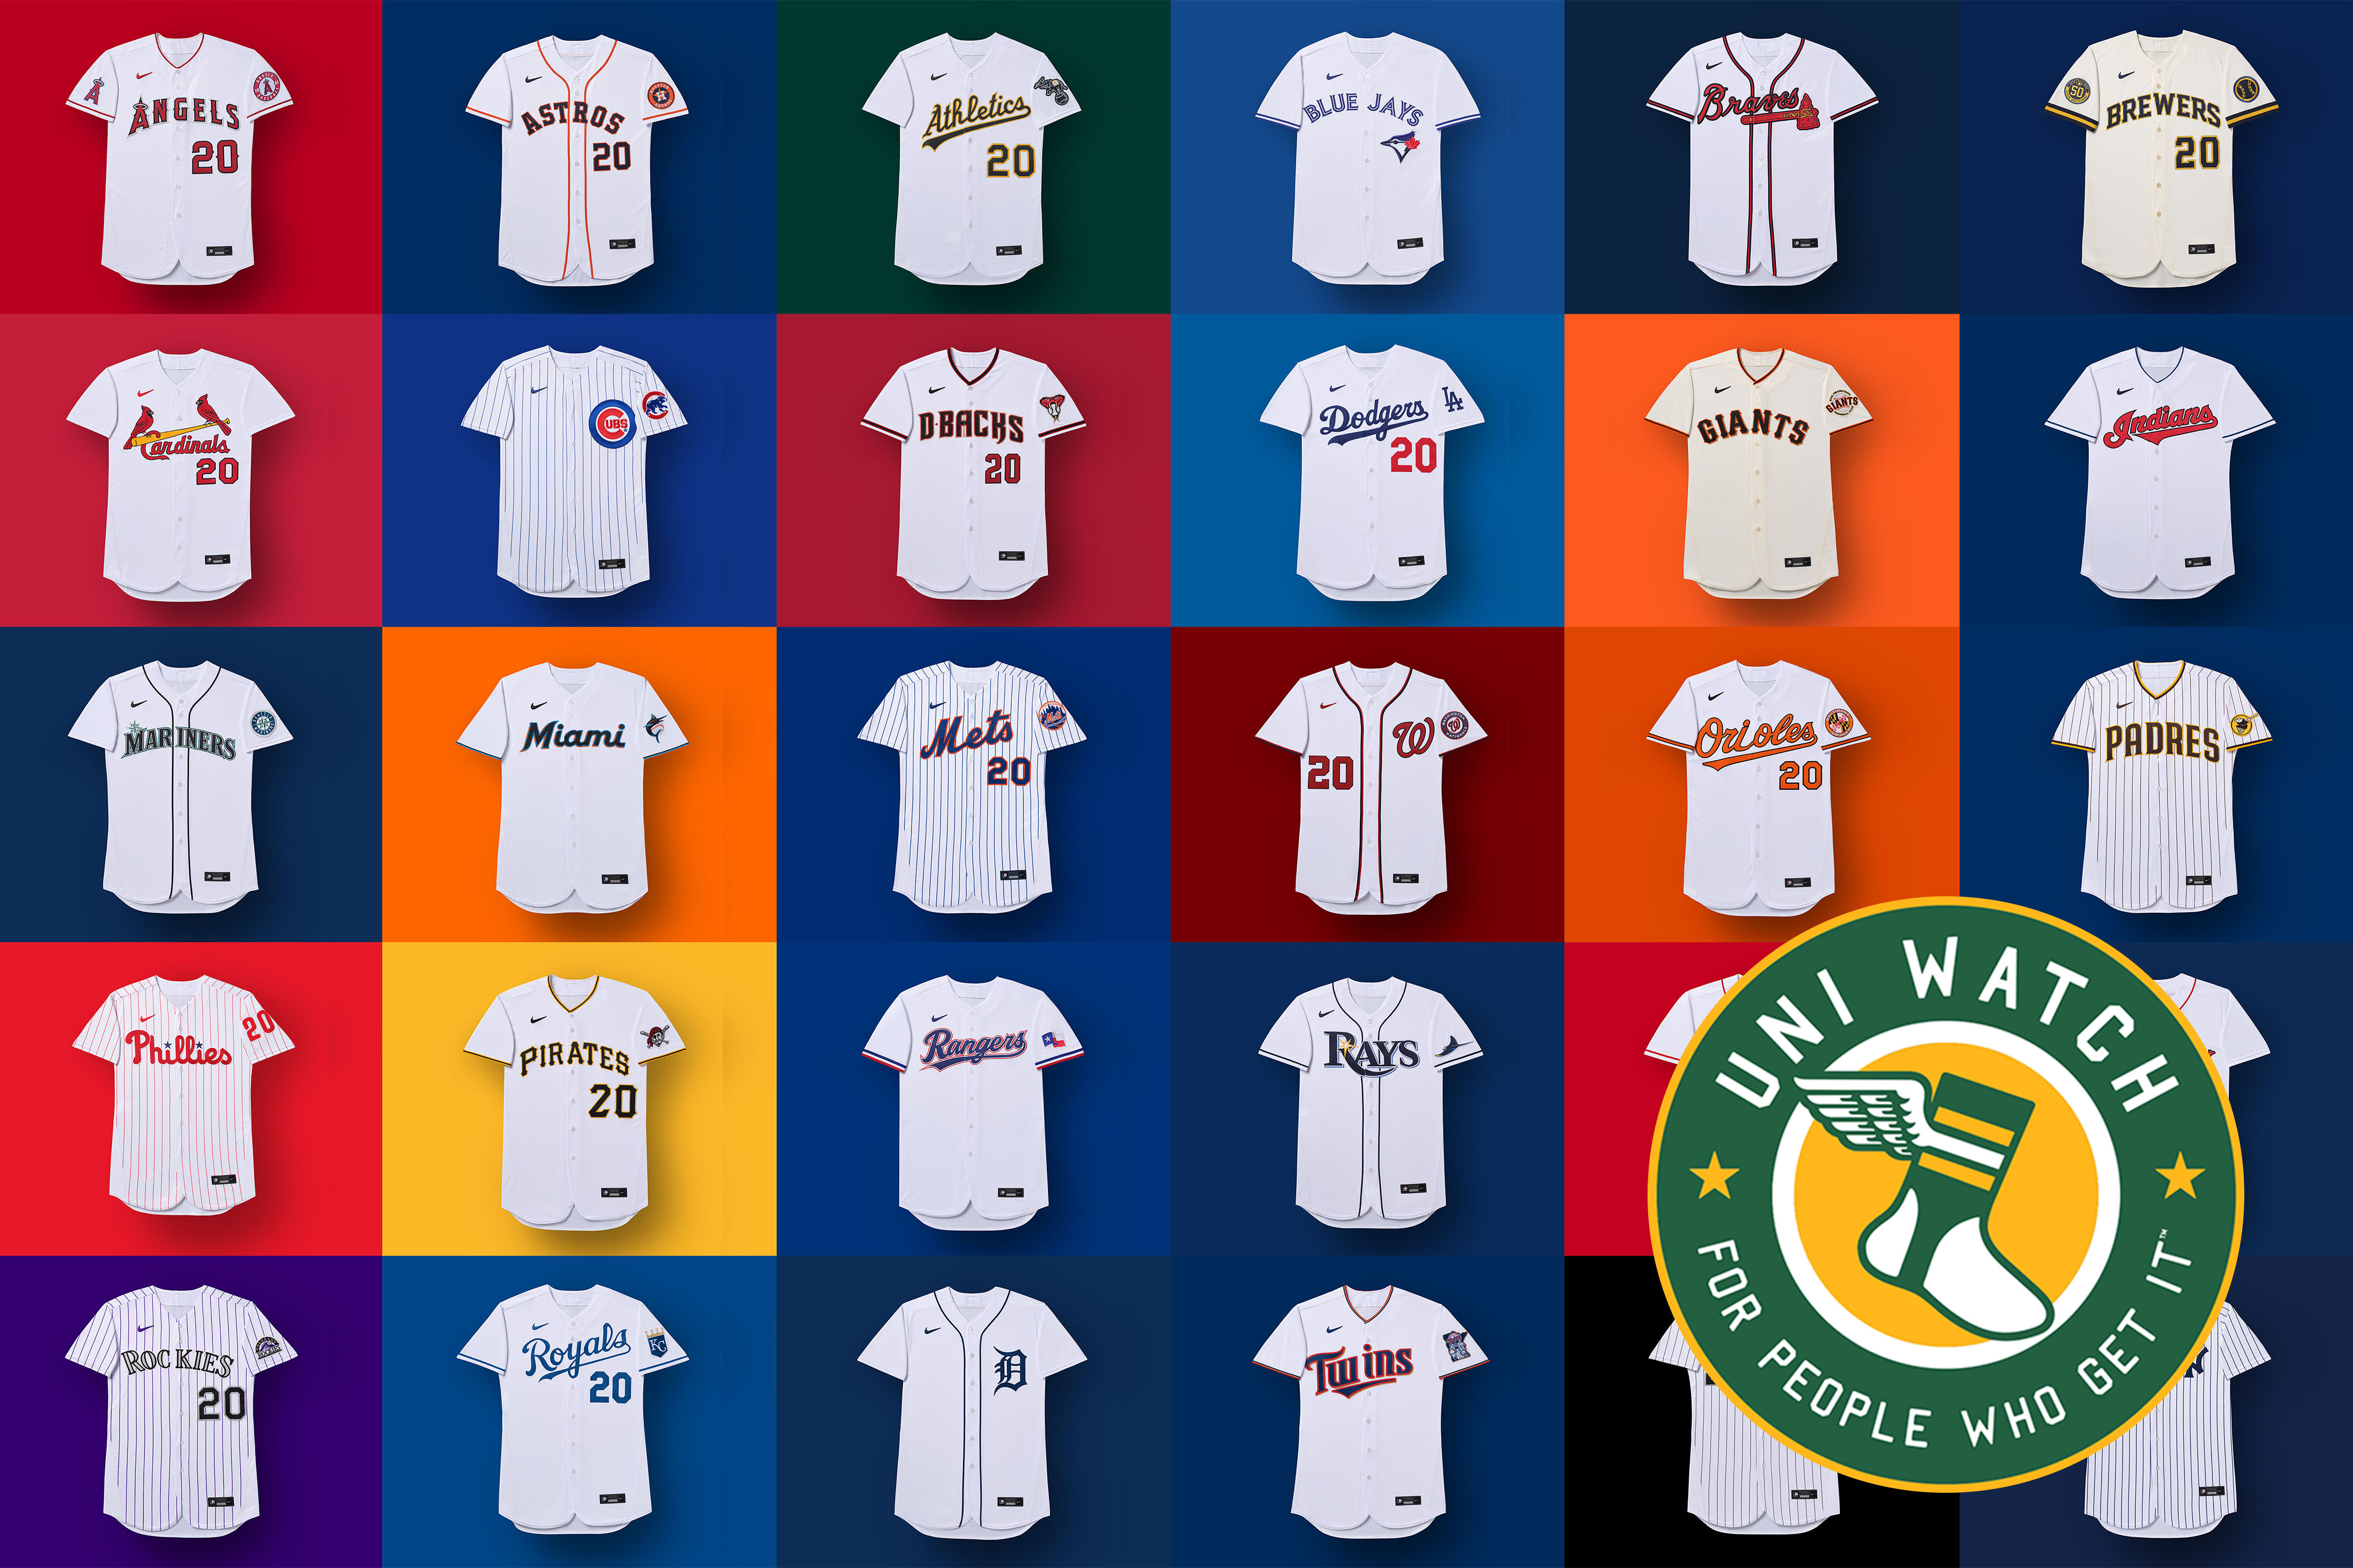 Jersey Baseball Major League Baseball # 99 Richter New York Yankees